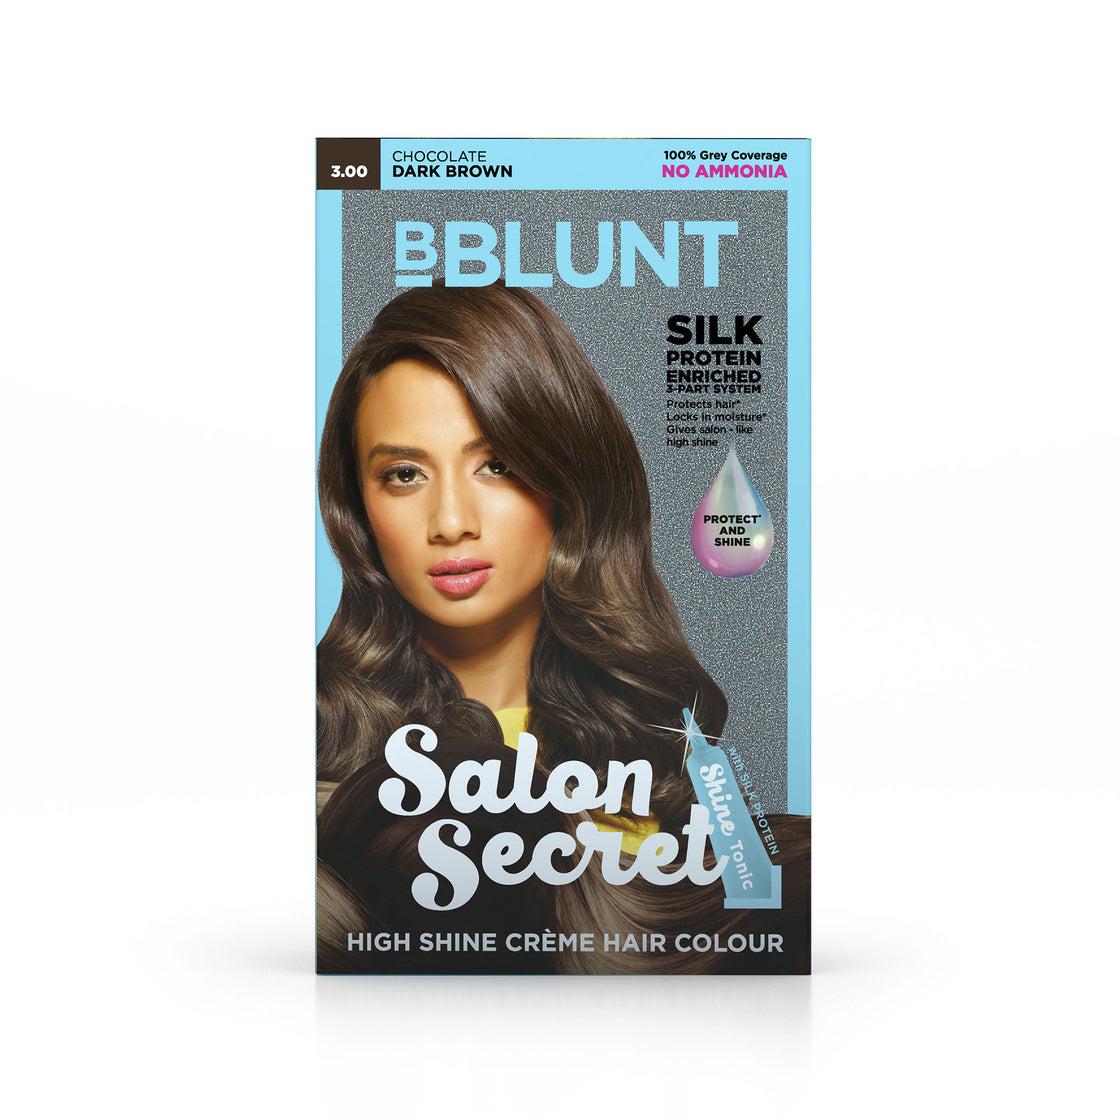 Bblunt Salon Secret High Shine Creme Hair Colour Chocolate Dark Brown 3 - Pack Of 2-4